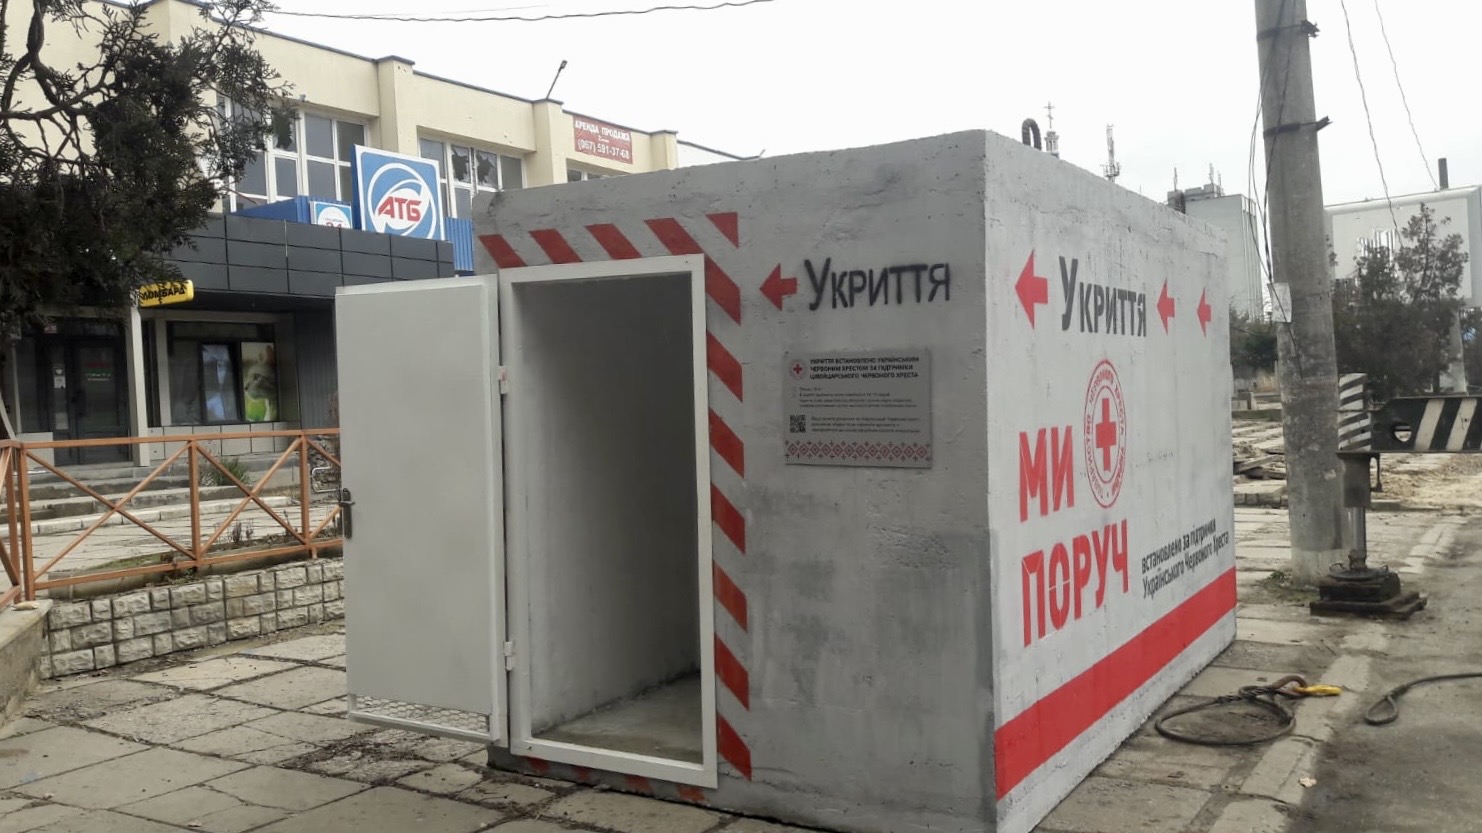 Ukrainian Red Cross Installs Mobile Shelters: Citizens’ Safety Above All Else